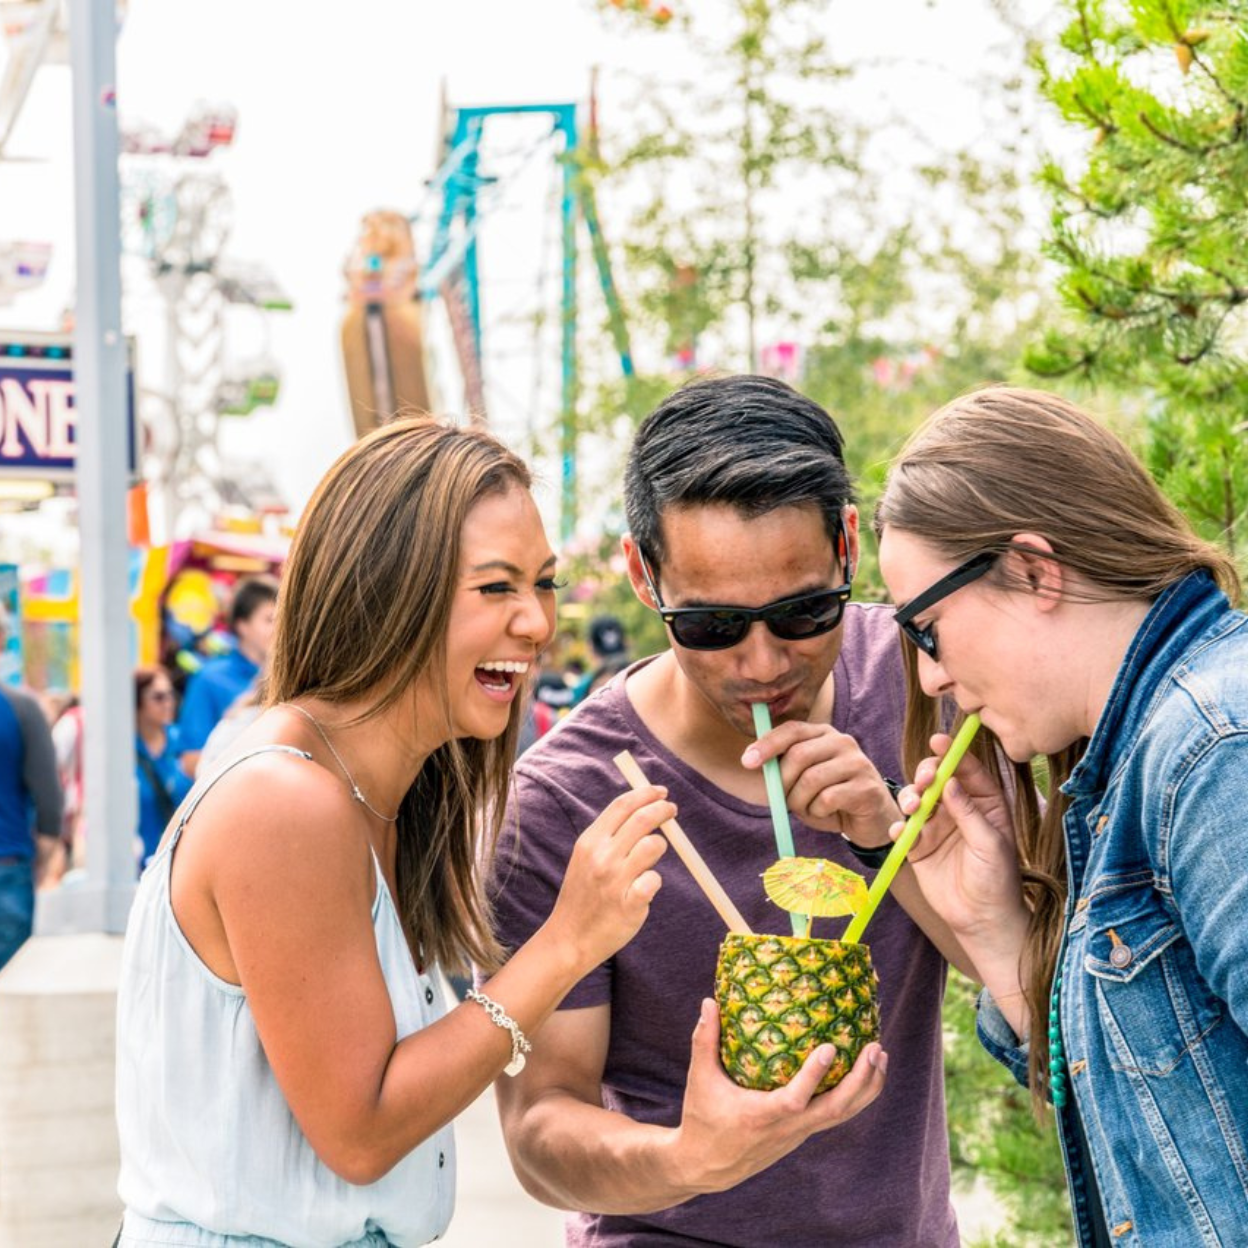 Edmonton-things-to-do-best-restaurants-Edmonton-Alberta-glamping-breweries-Edmonton-biking-tours-best-restraunts-downtown-Edmonton-fun-date-ideas-edmonton-food-bike-tour-group-of-friends-drinking-pineapple-drink-from-K-Days-summer-festival